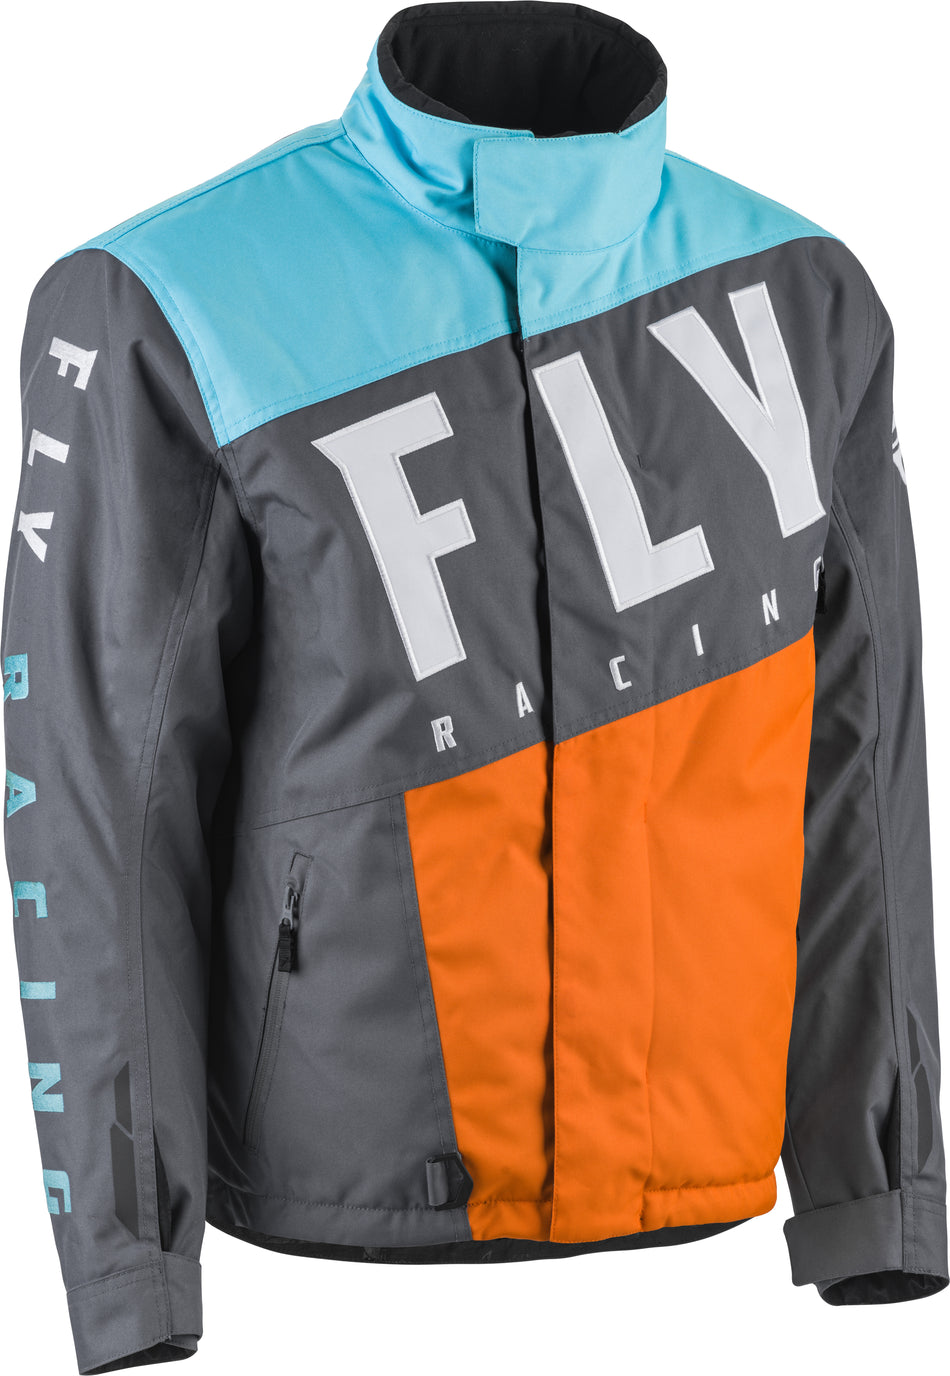 FLY RACING Youth Snx Pro Jacket Orange/Light Blue/Black Ym 470-4114YM